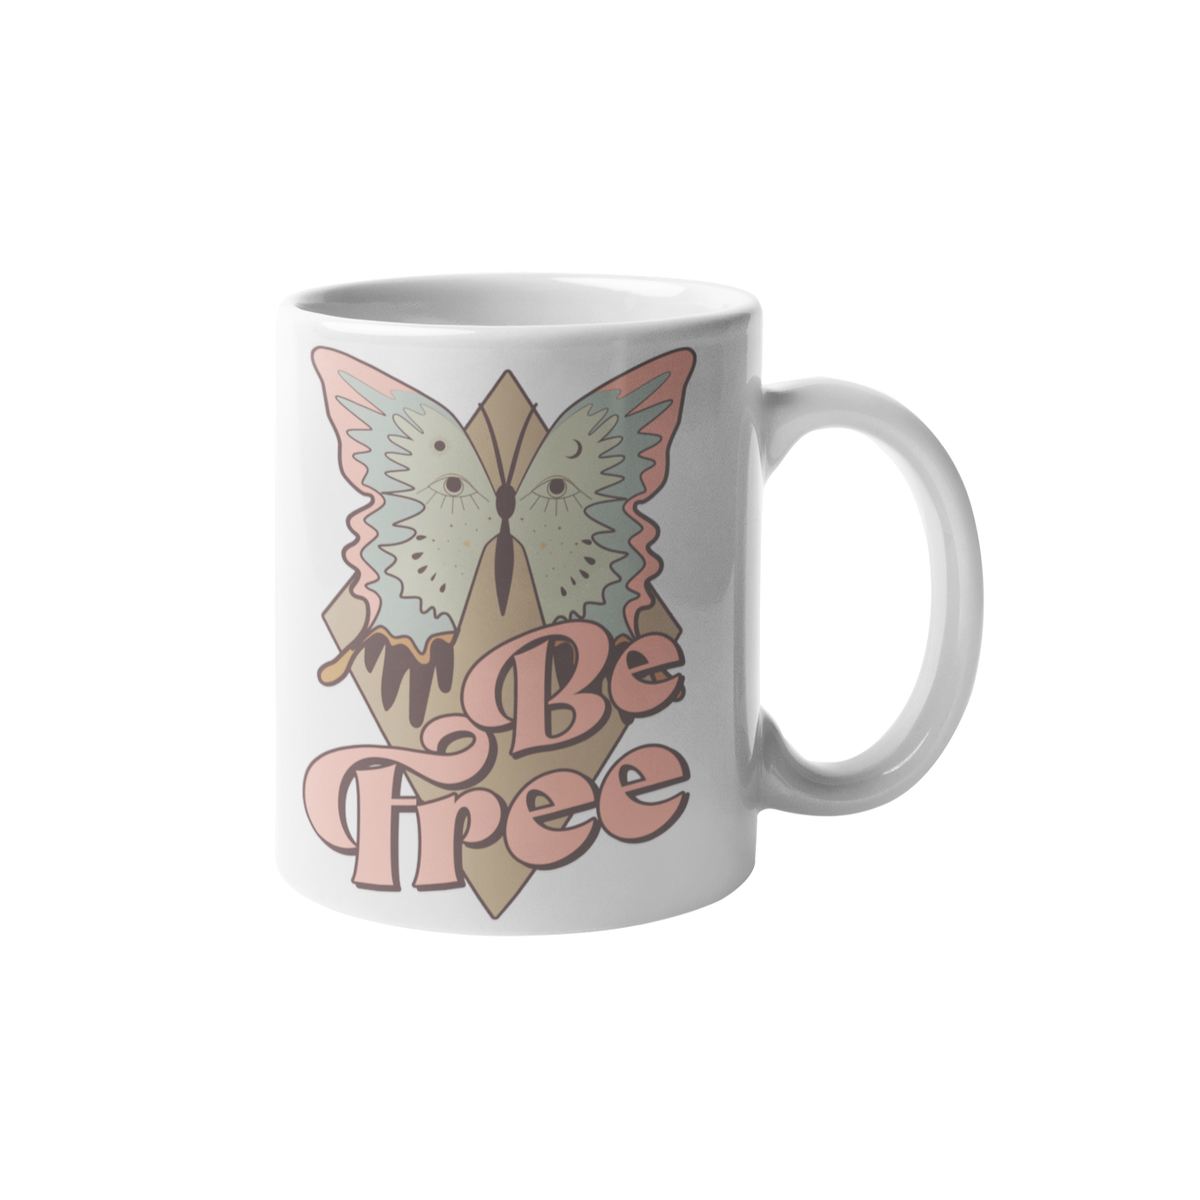 Be free - Mug